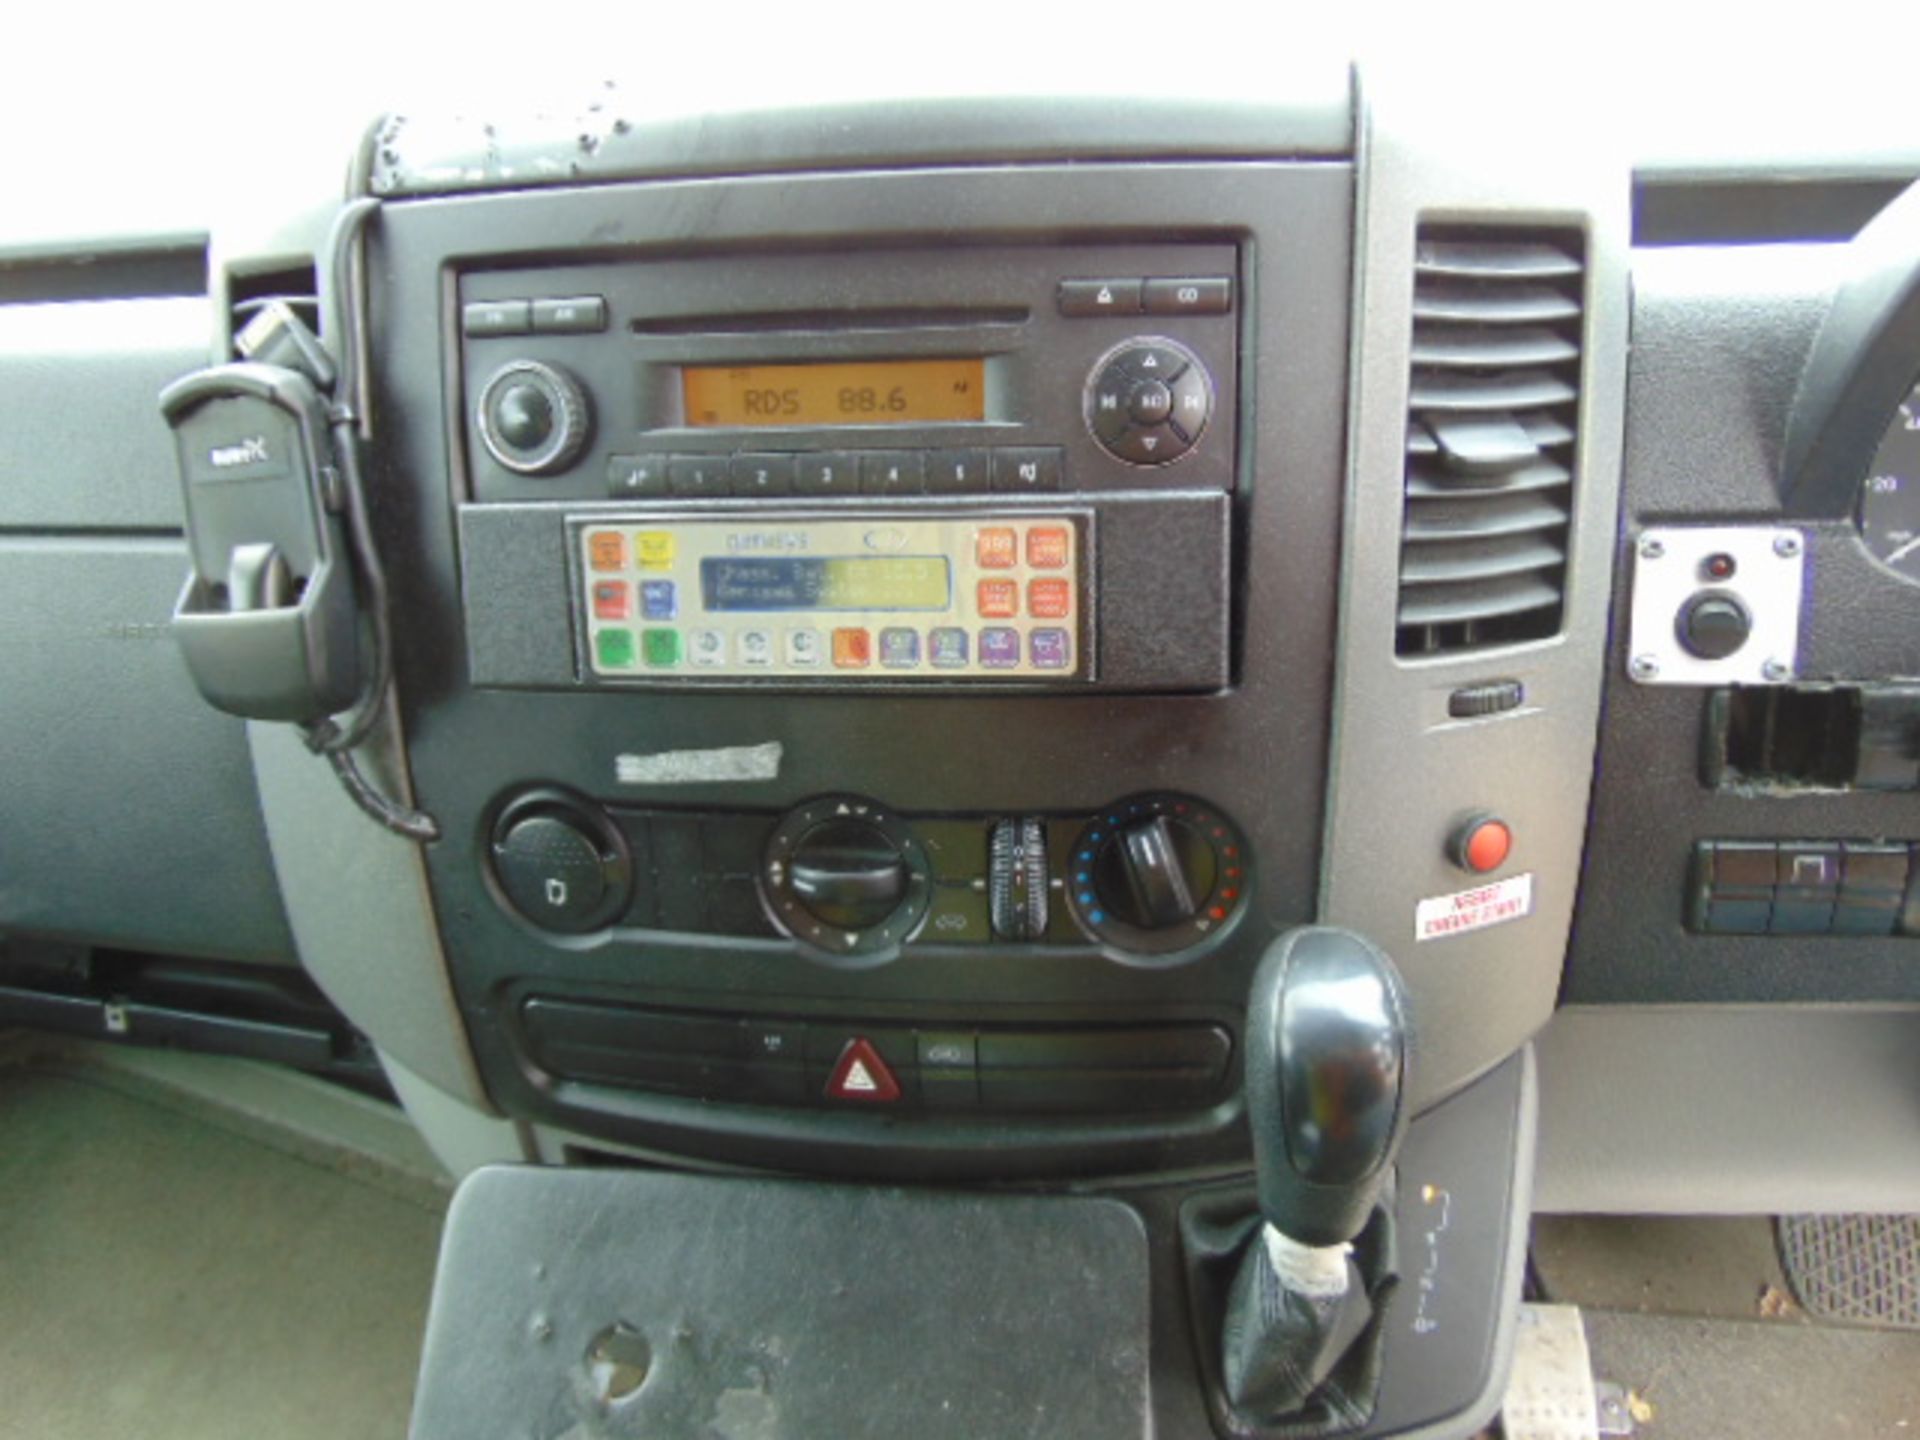 Mercedes Sprinter 515 CDI Turbo diesel ambulance - Image 11 of 21